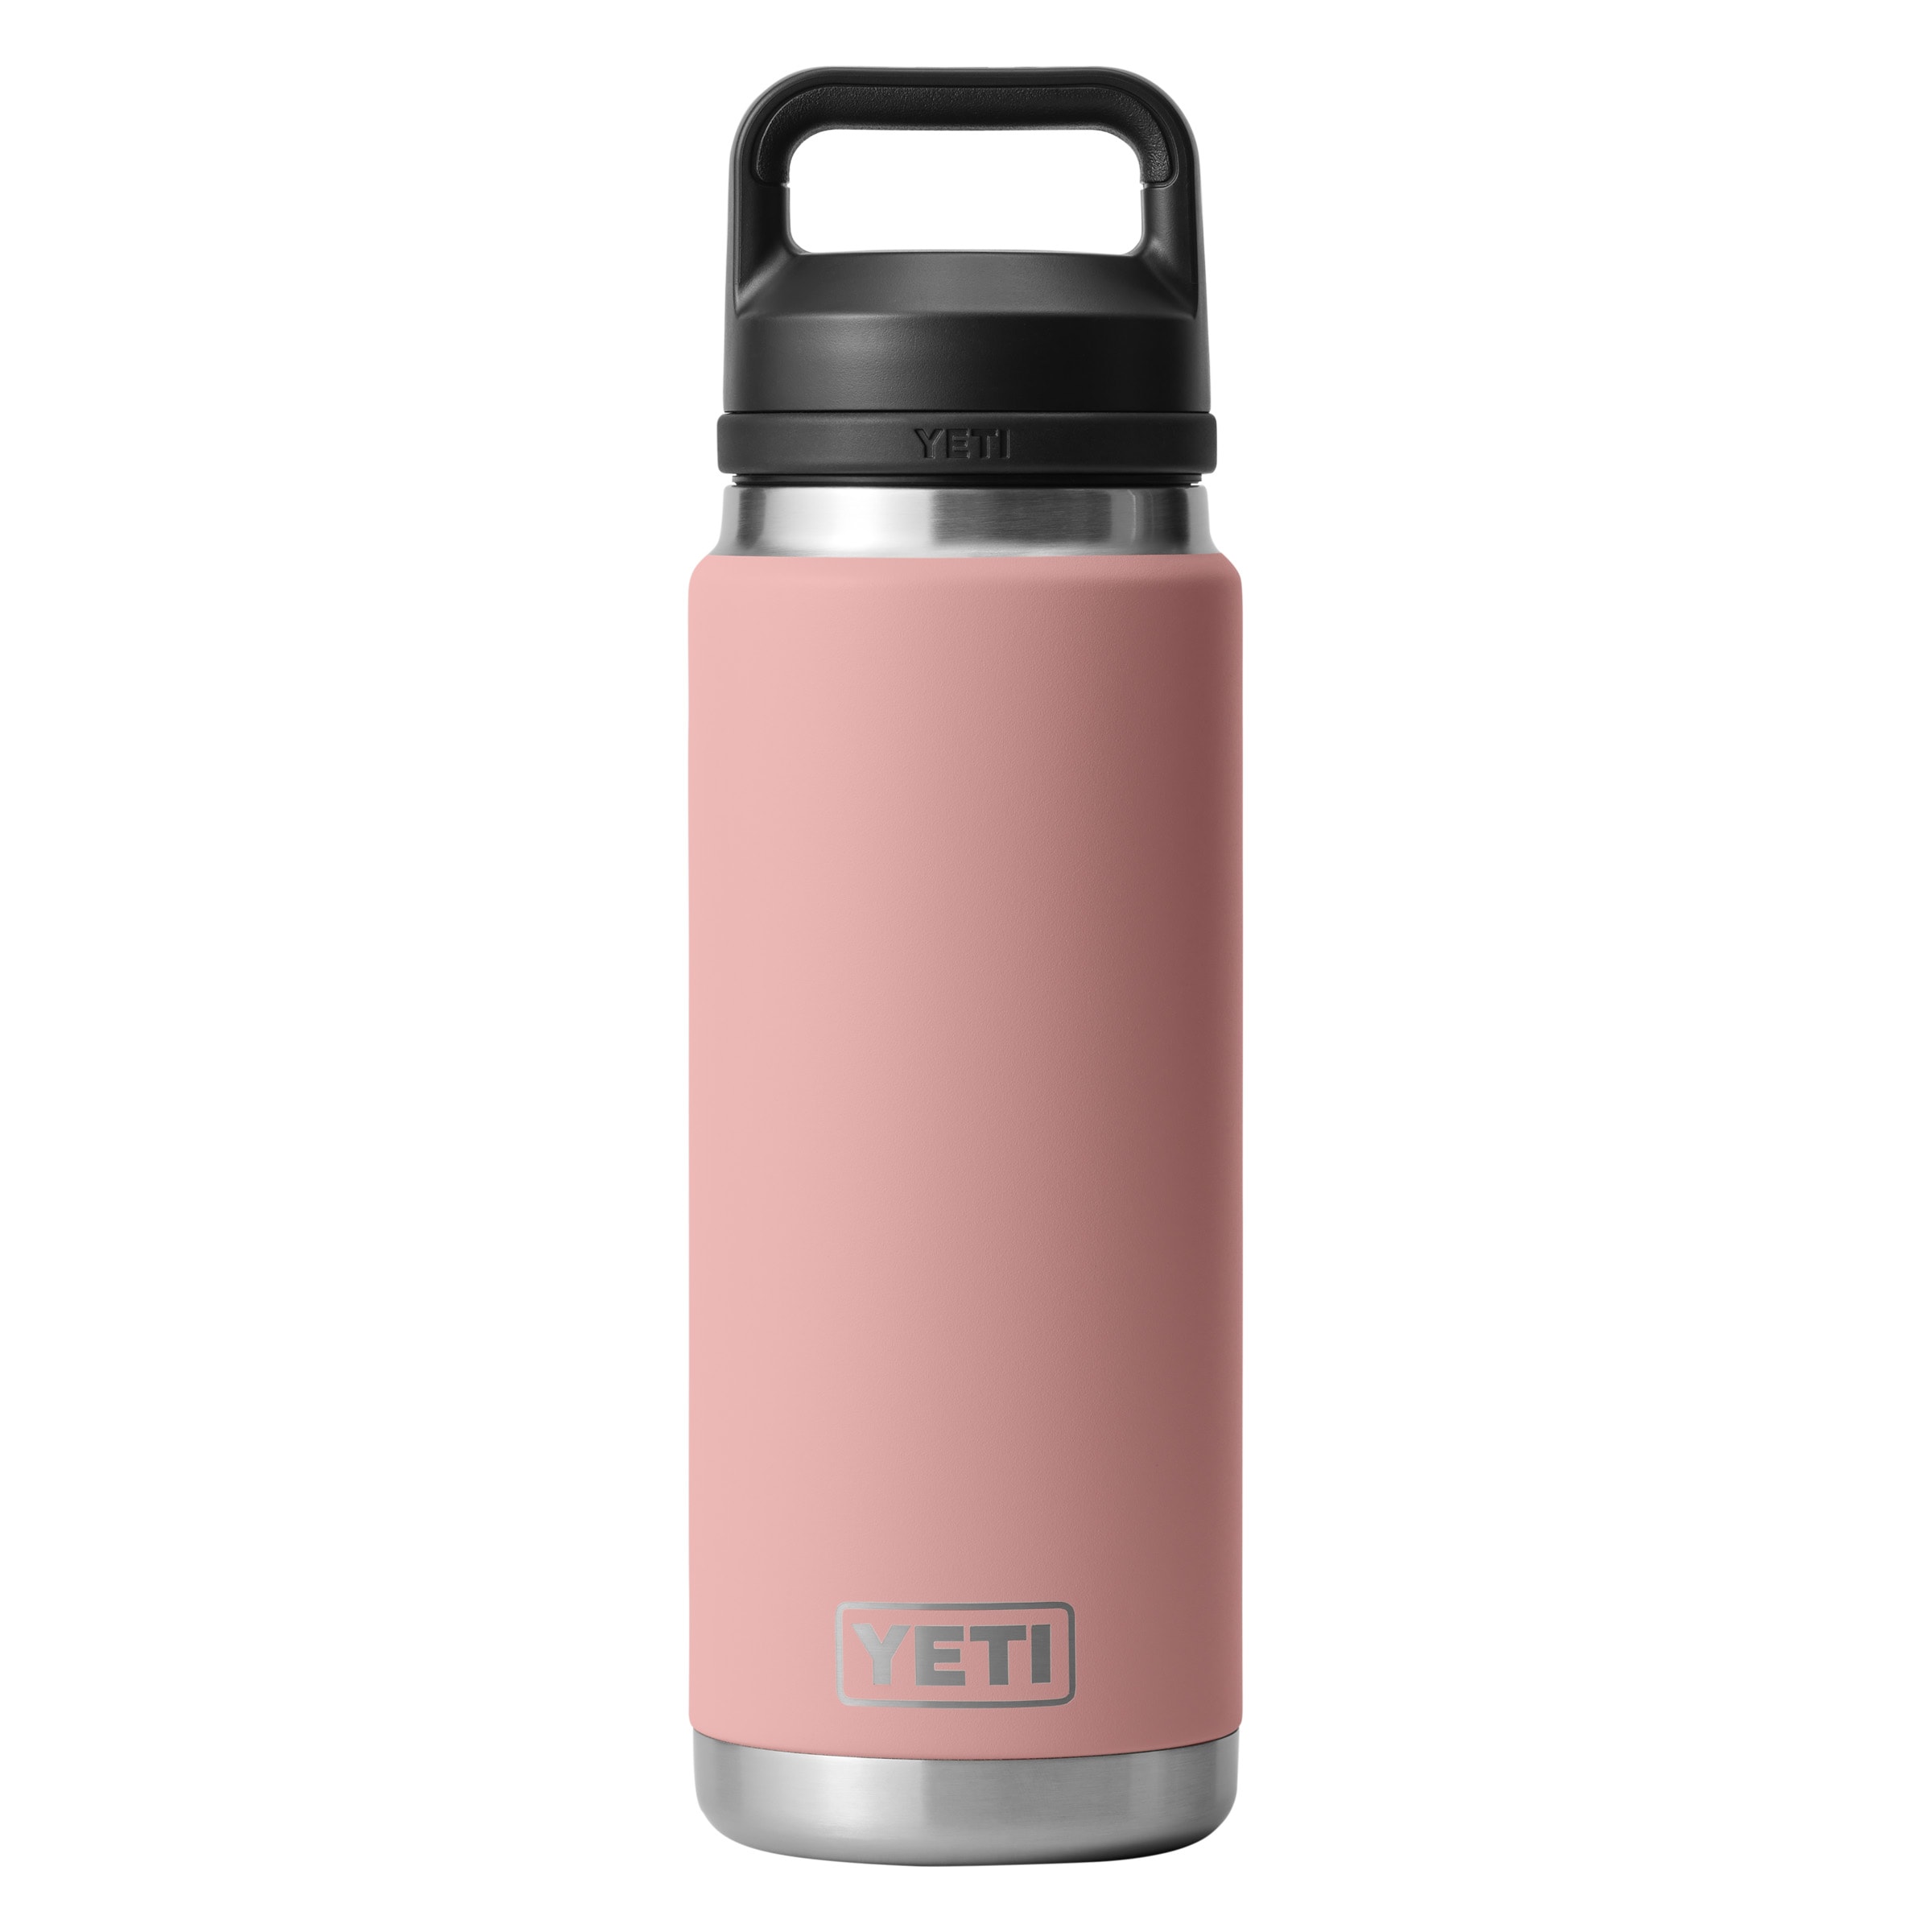 YETI - Rambler - 26oz Bottle - Sandstone Pink